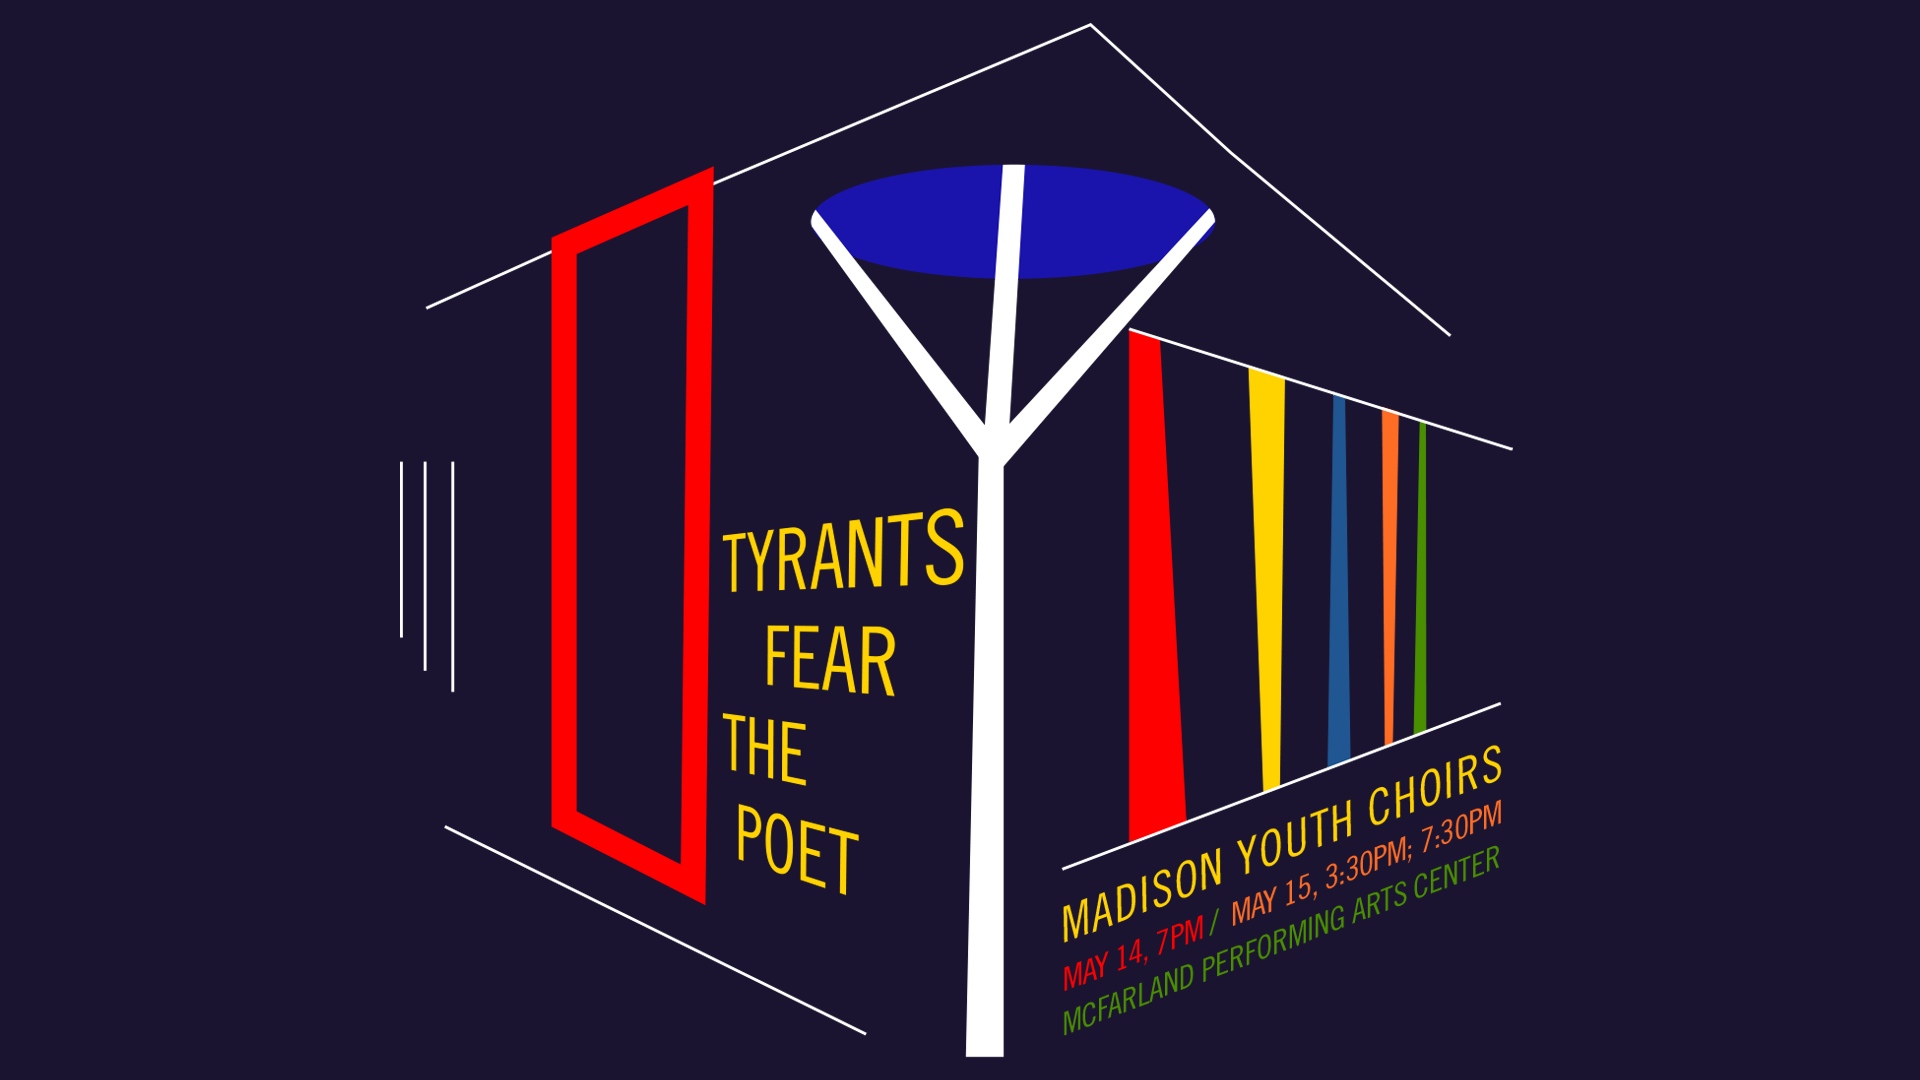 Tyrants Fear the Poet